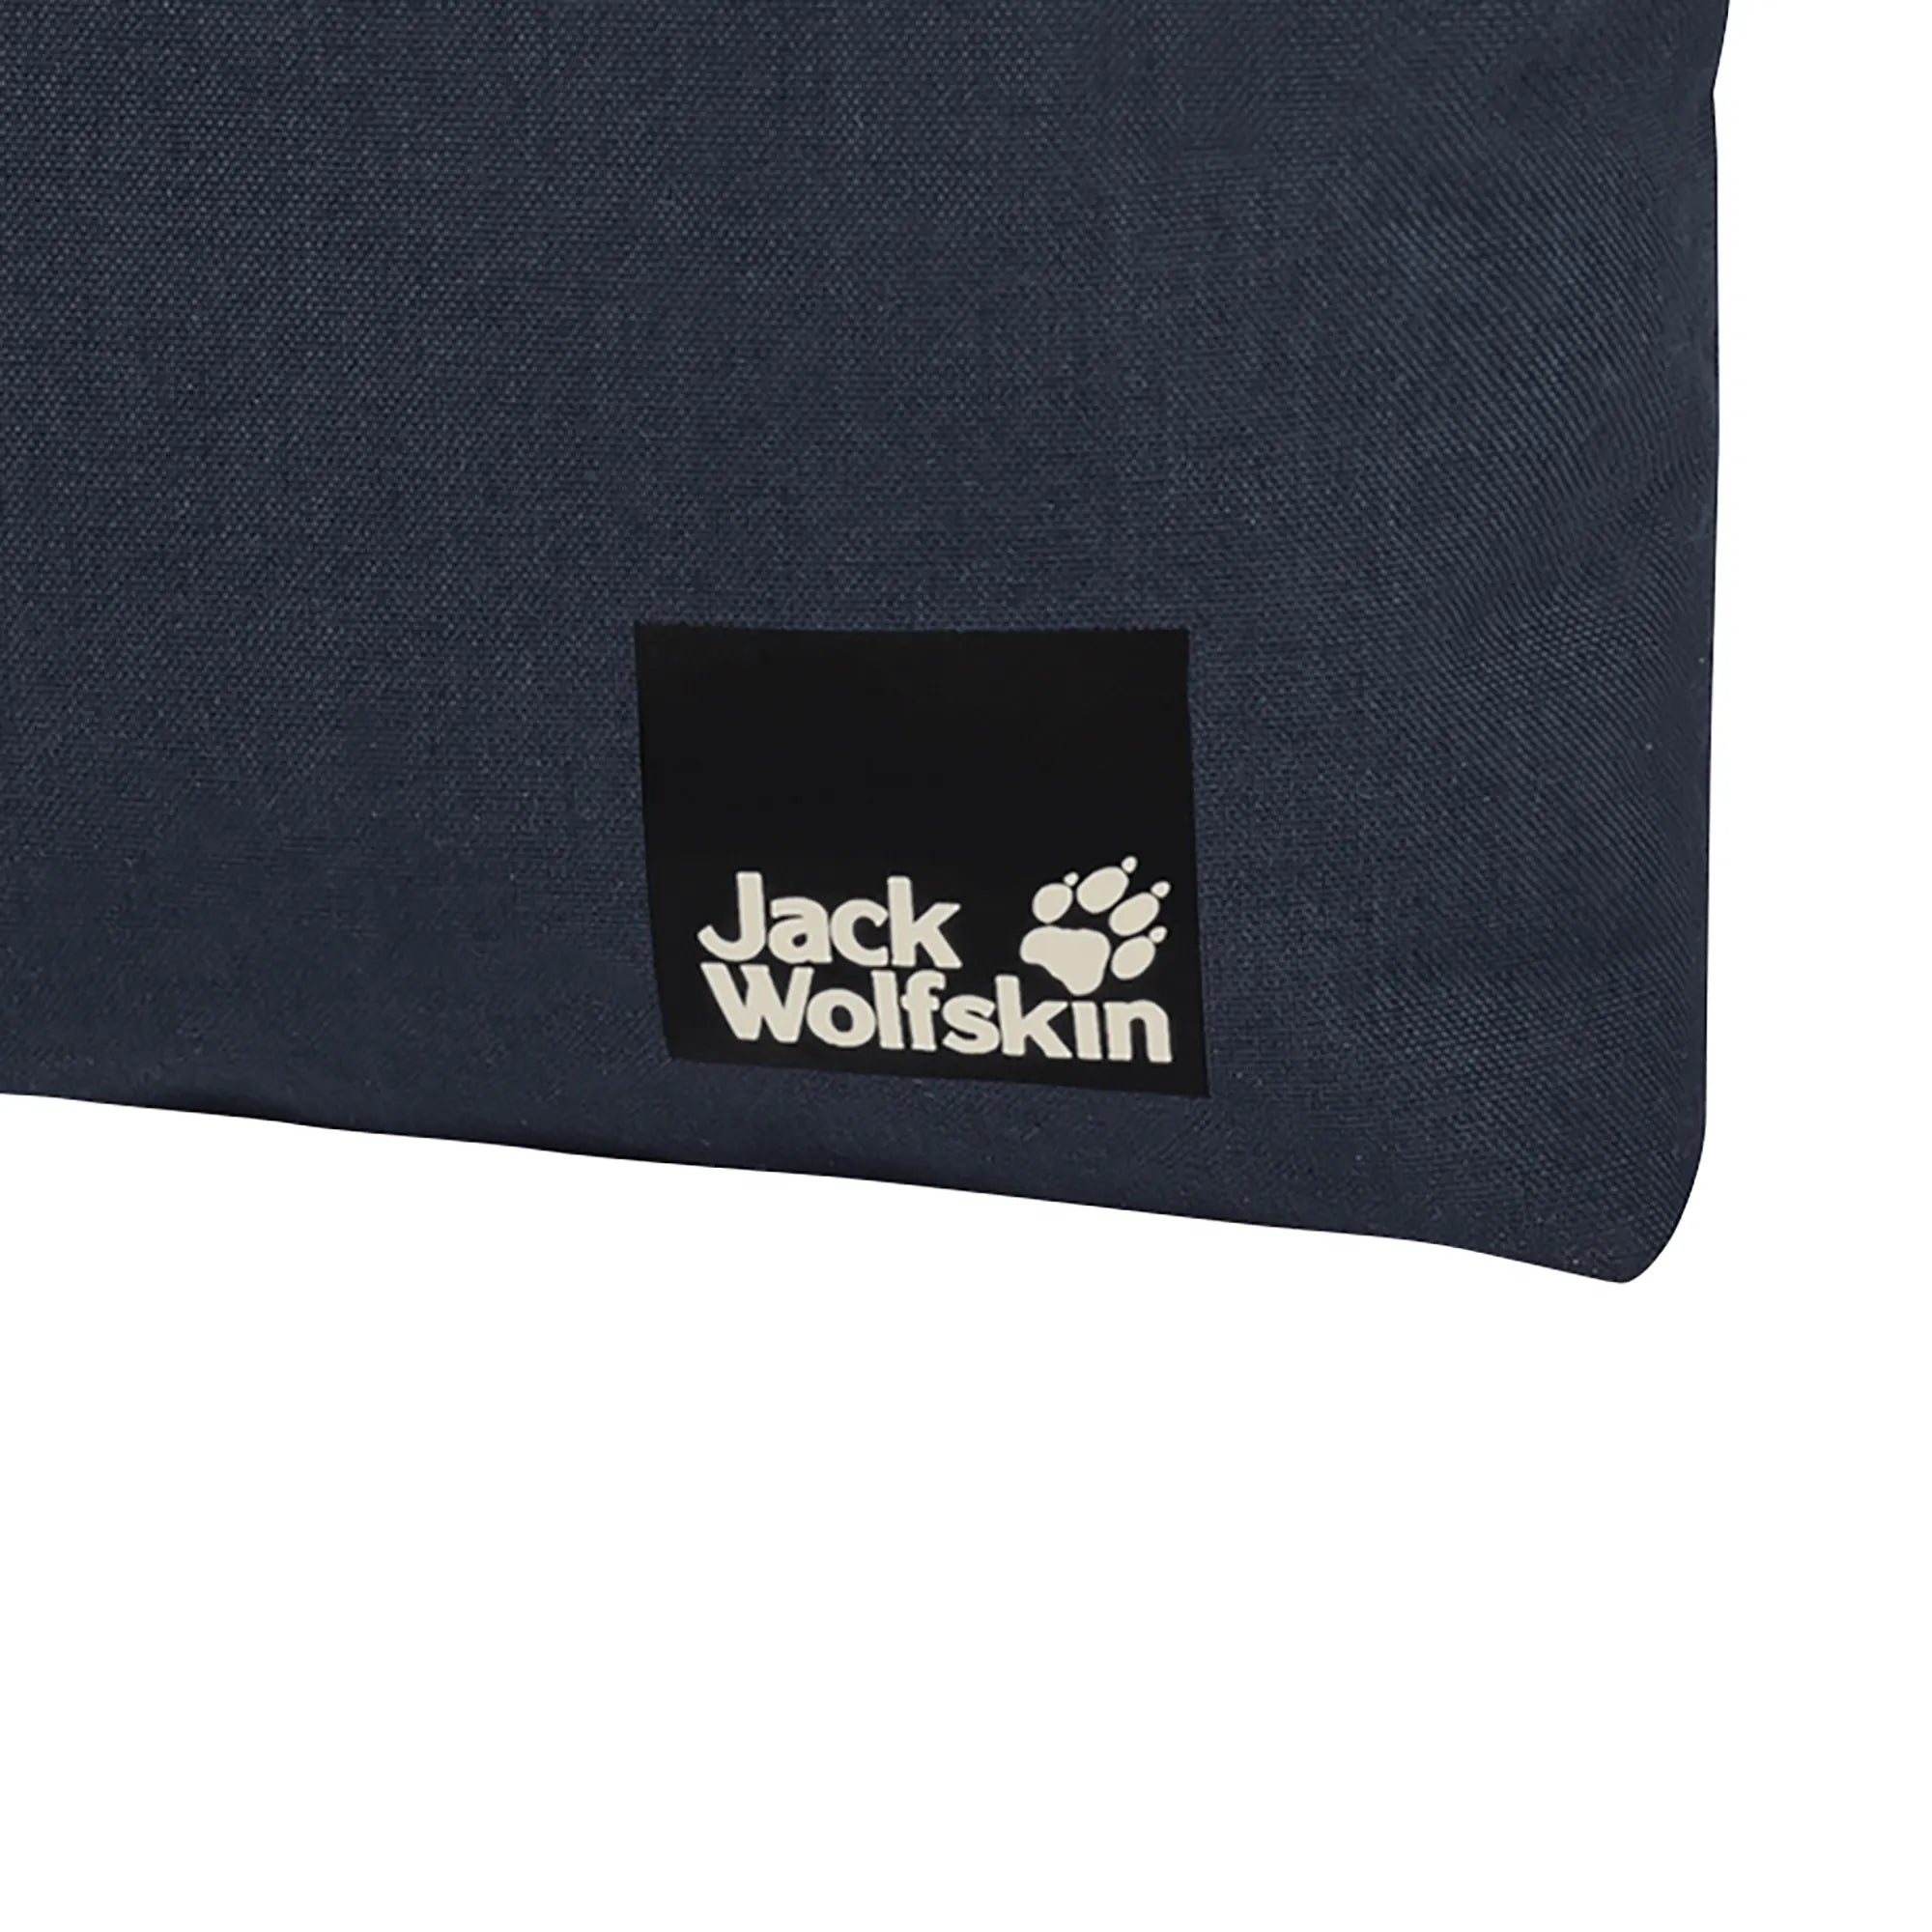 Jack Wolfskin Daypacks &amp; Bags 365 sac à bandoulière 22 cm - Bleu Nuit